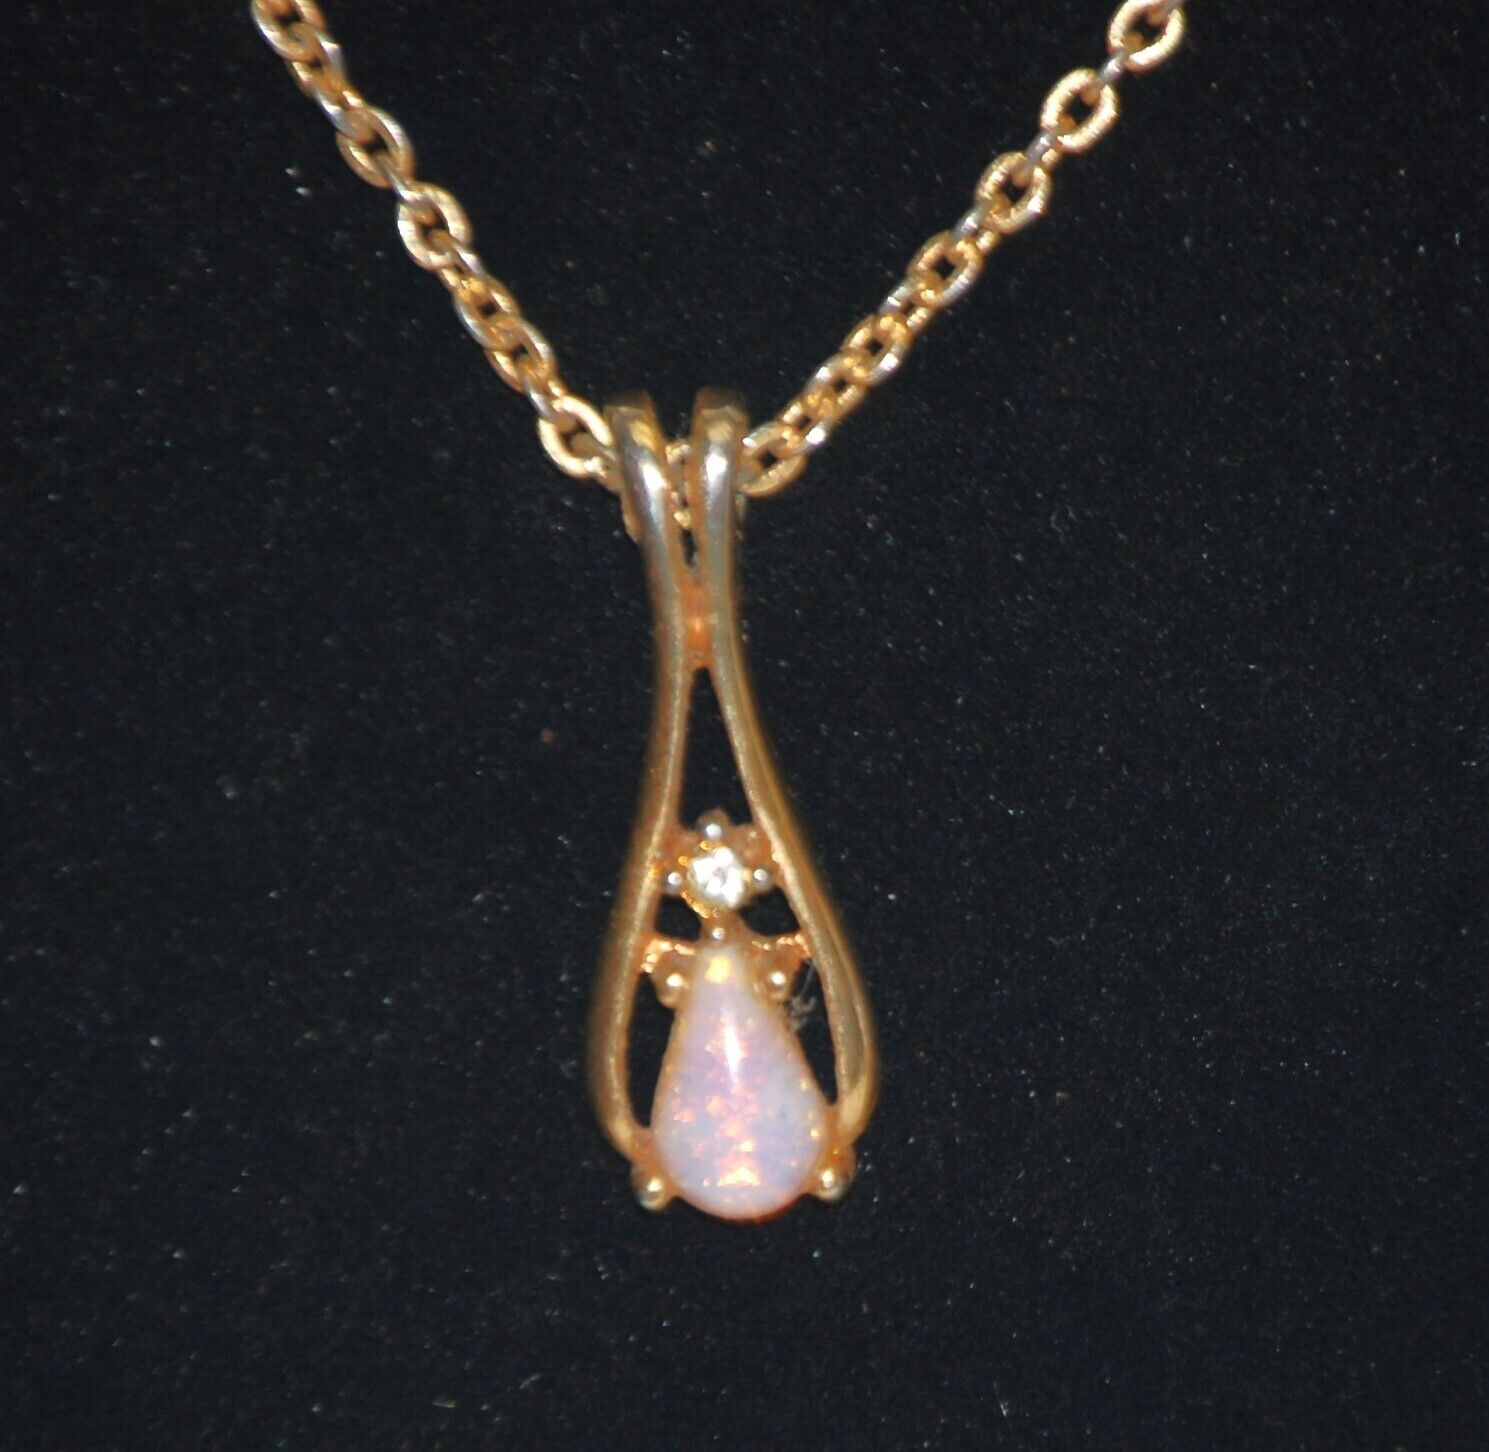 Avon Teardrop Fire Glow Faux Opal Necklace Gold Tone Rhinestone Accent Jewelry